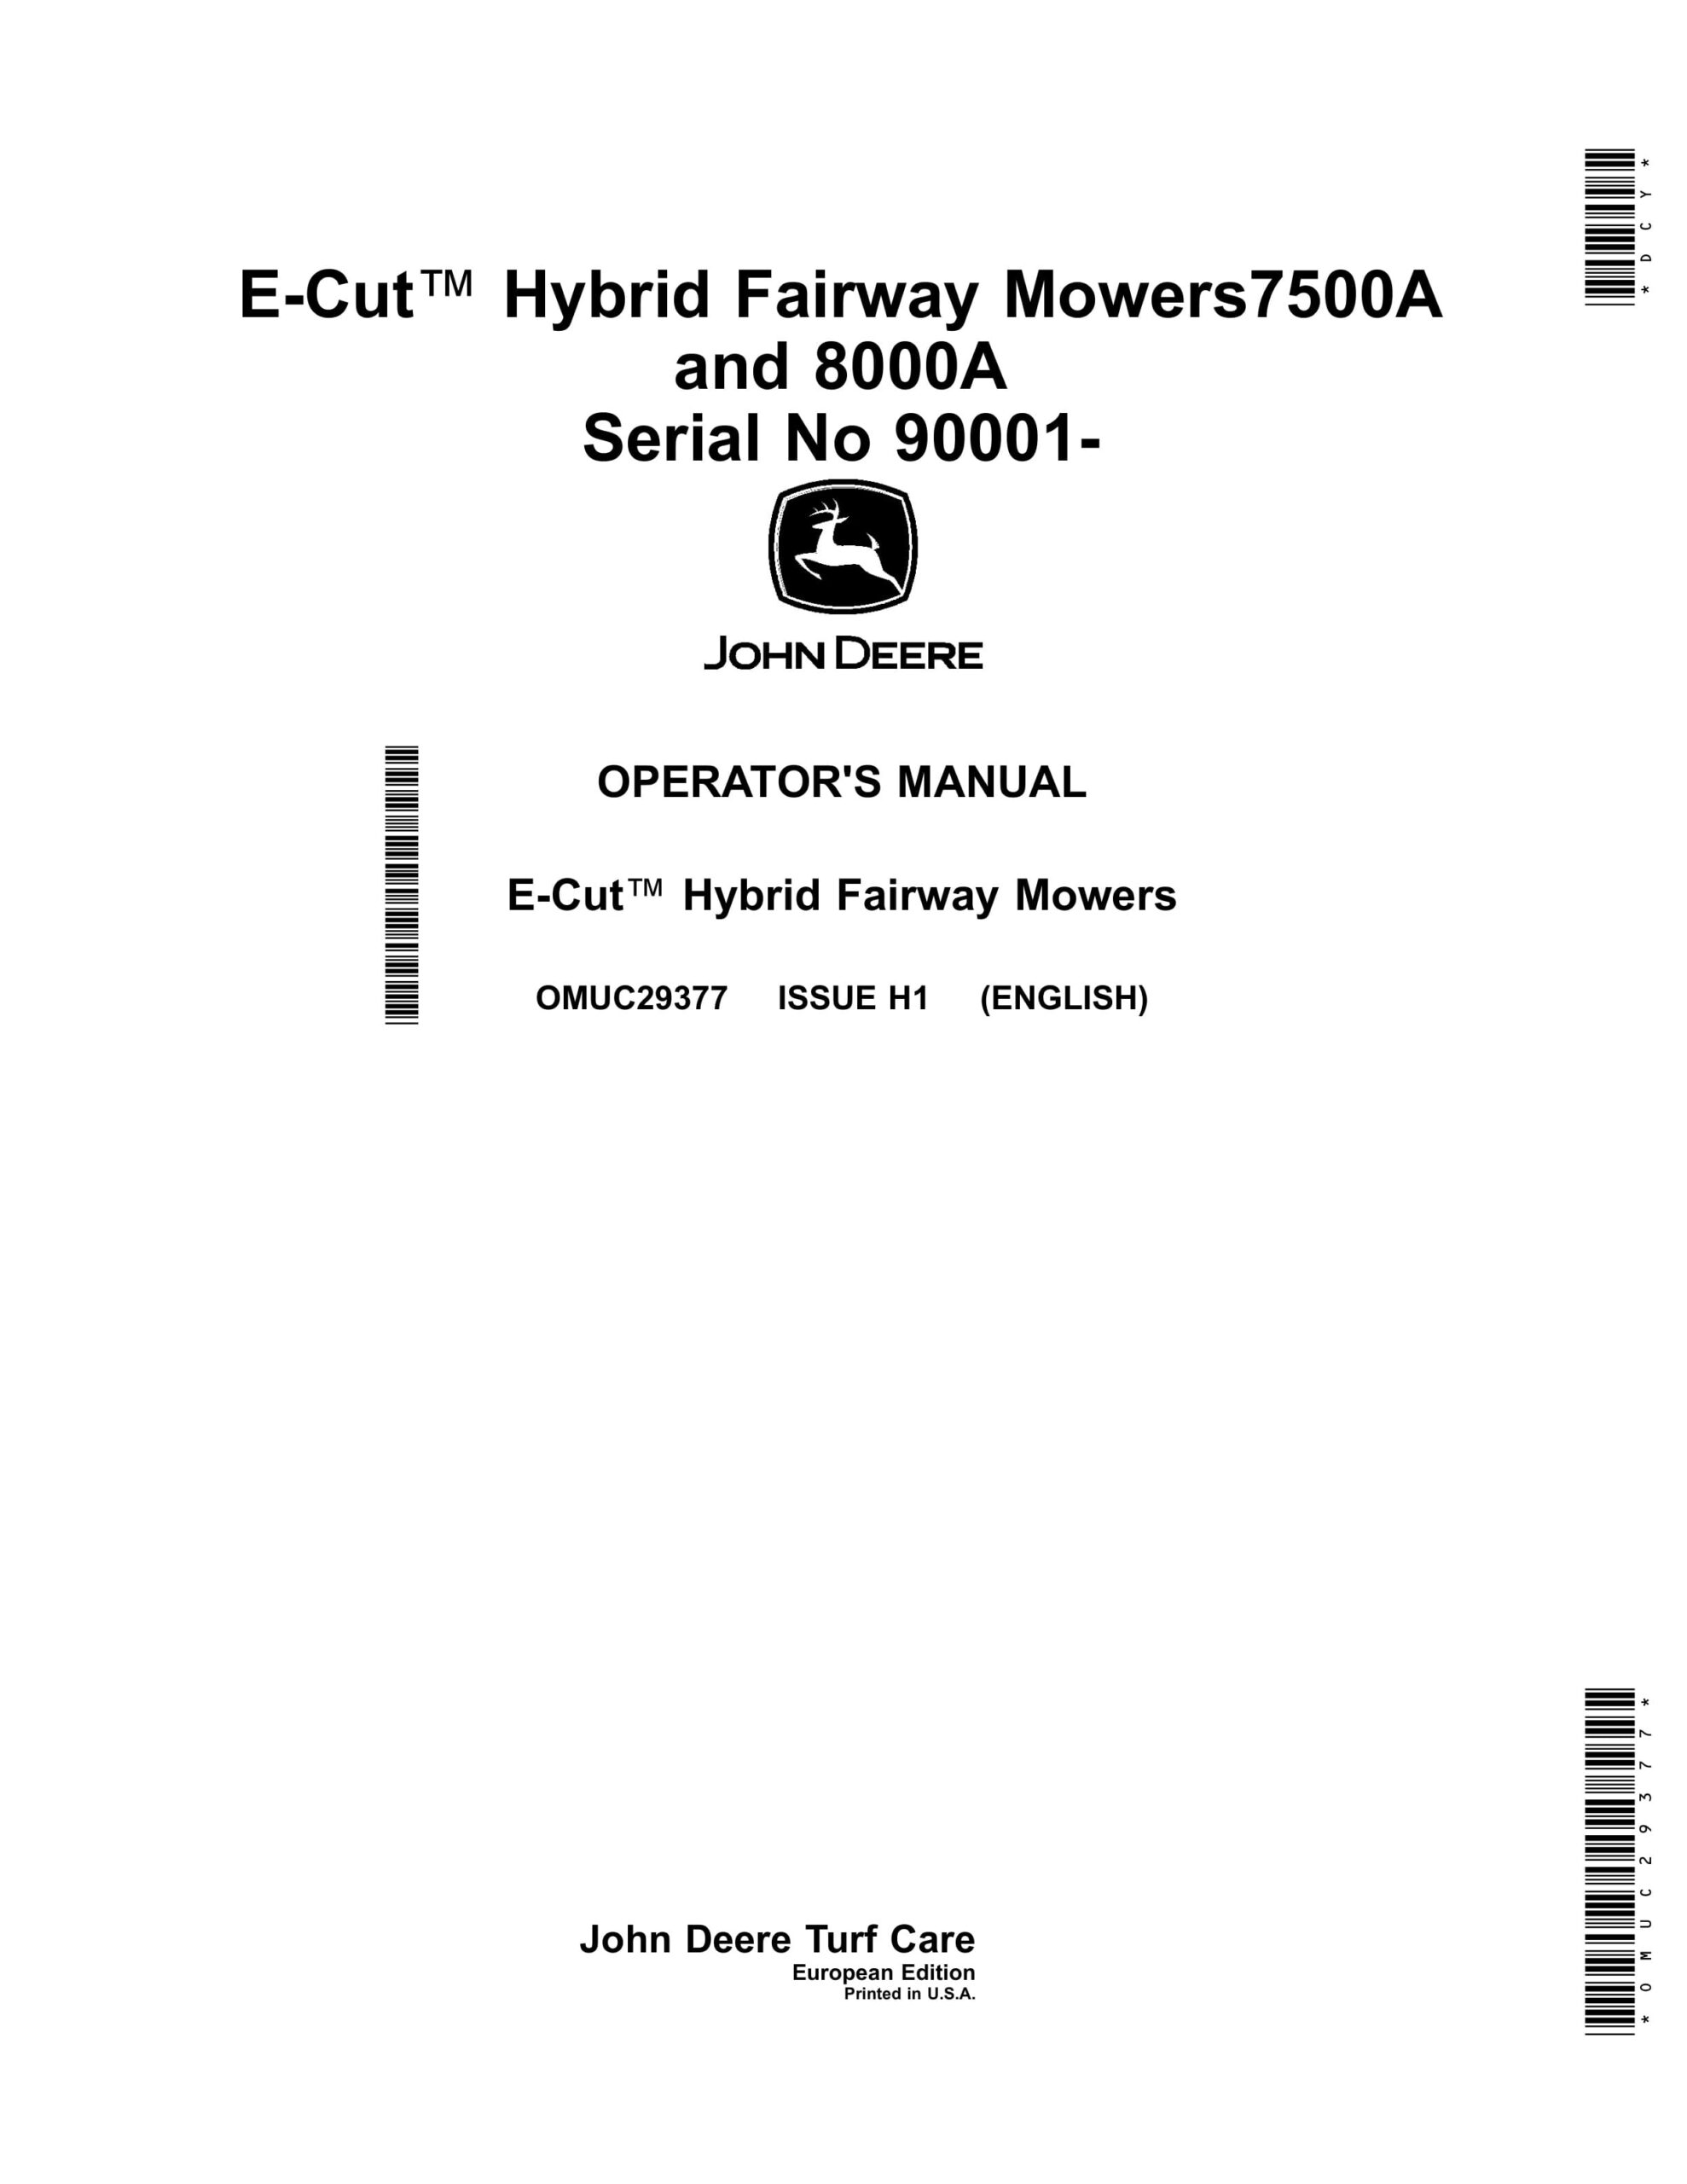 John Deere E-Cut Hybrid Fairway Mowers7500A and 8000A Serial No 90001- Operator Manual OMUC29377-1